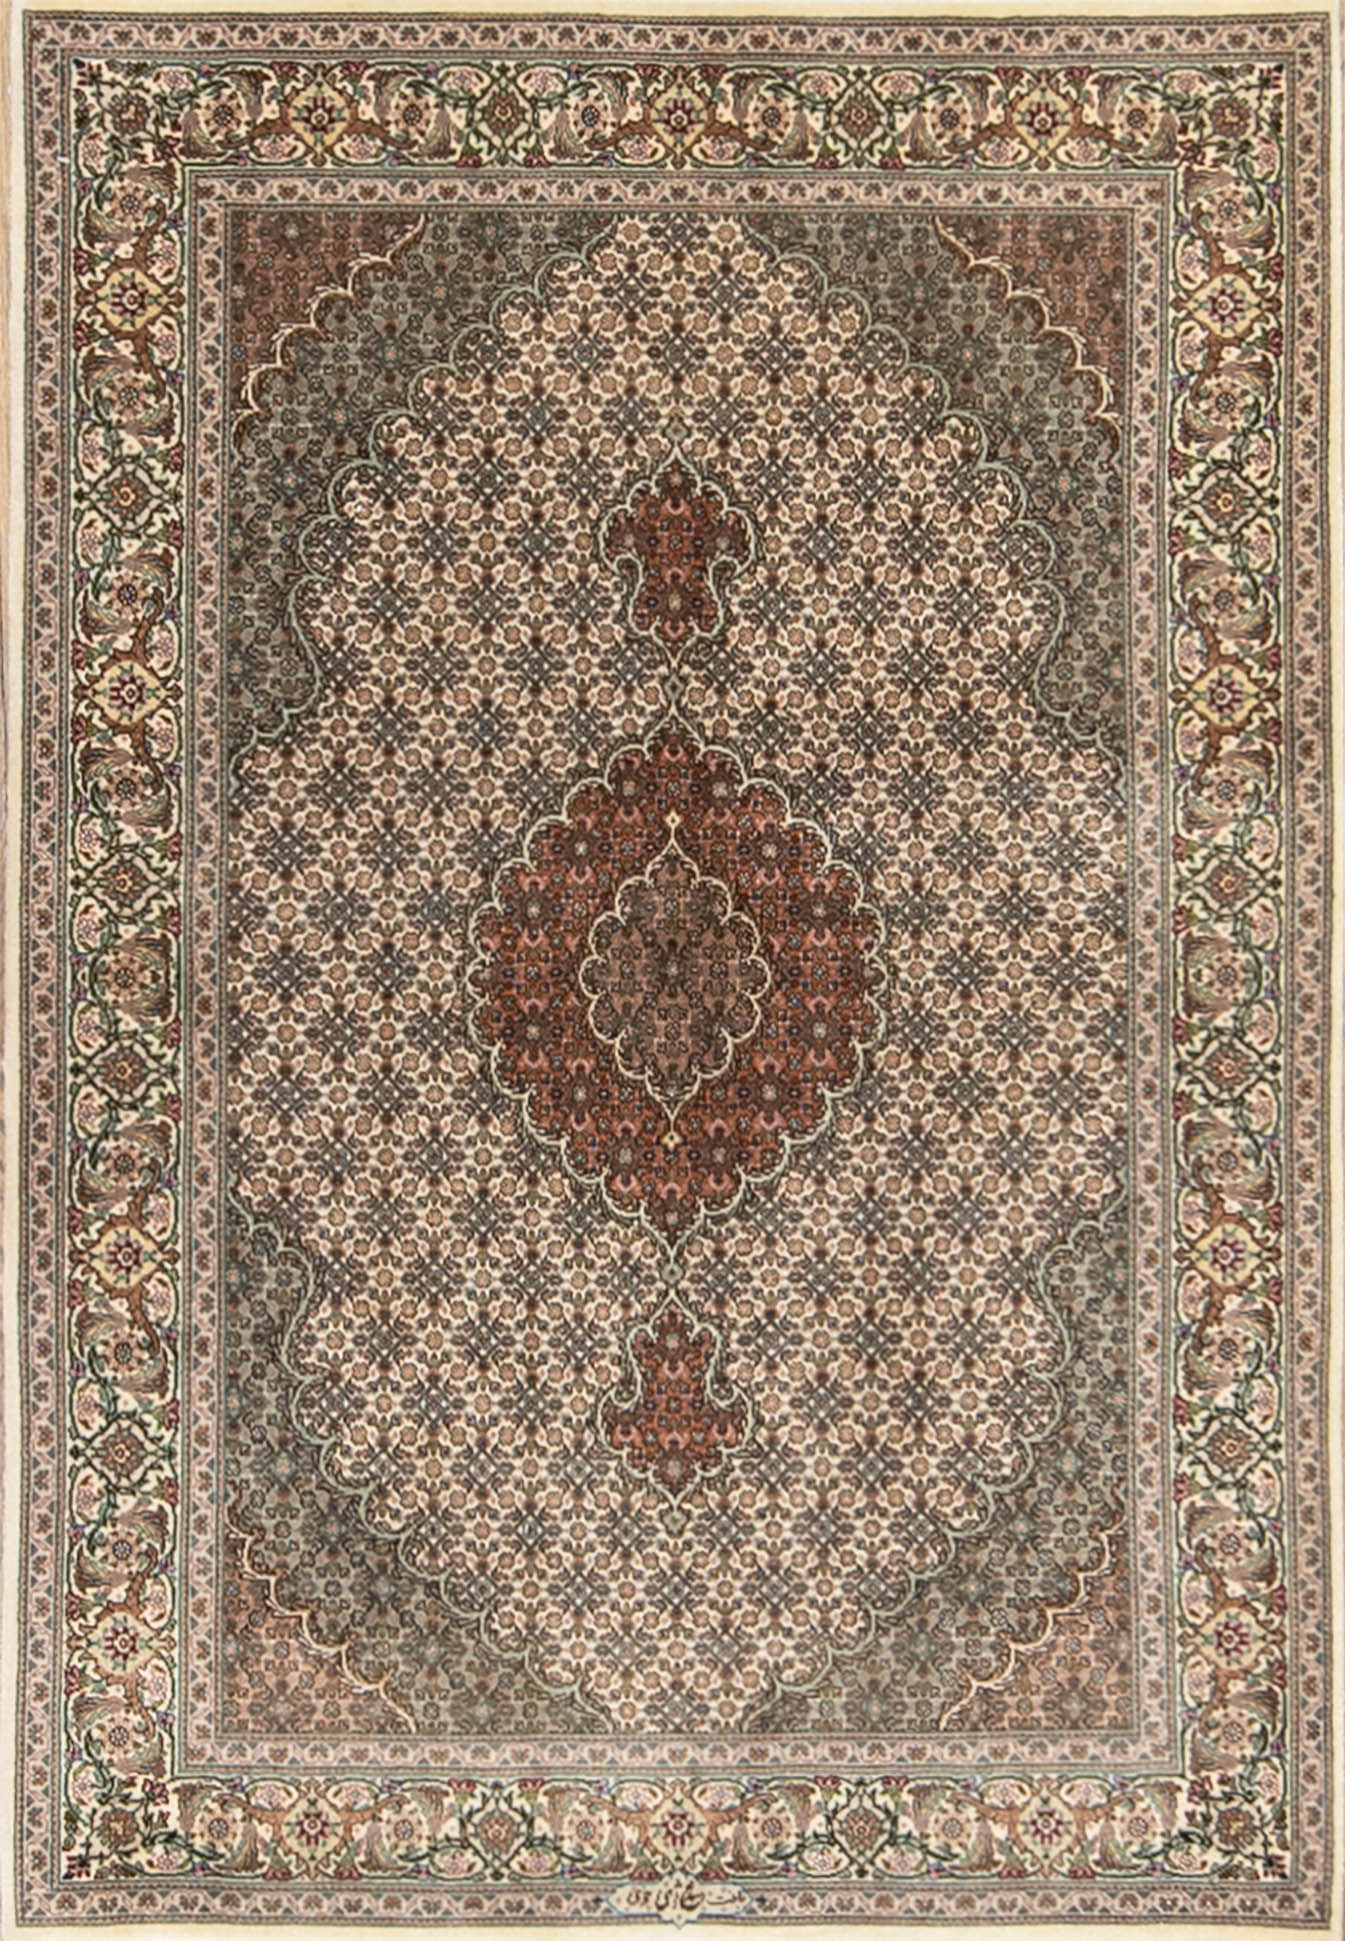 Handmade Persian Tabriz oriental rug, classic design wool and silk beige color Persian rug. Size 3.4x5.3.